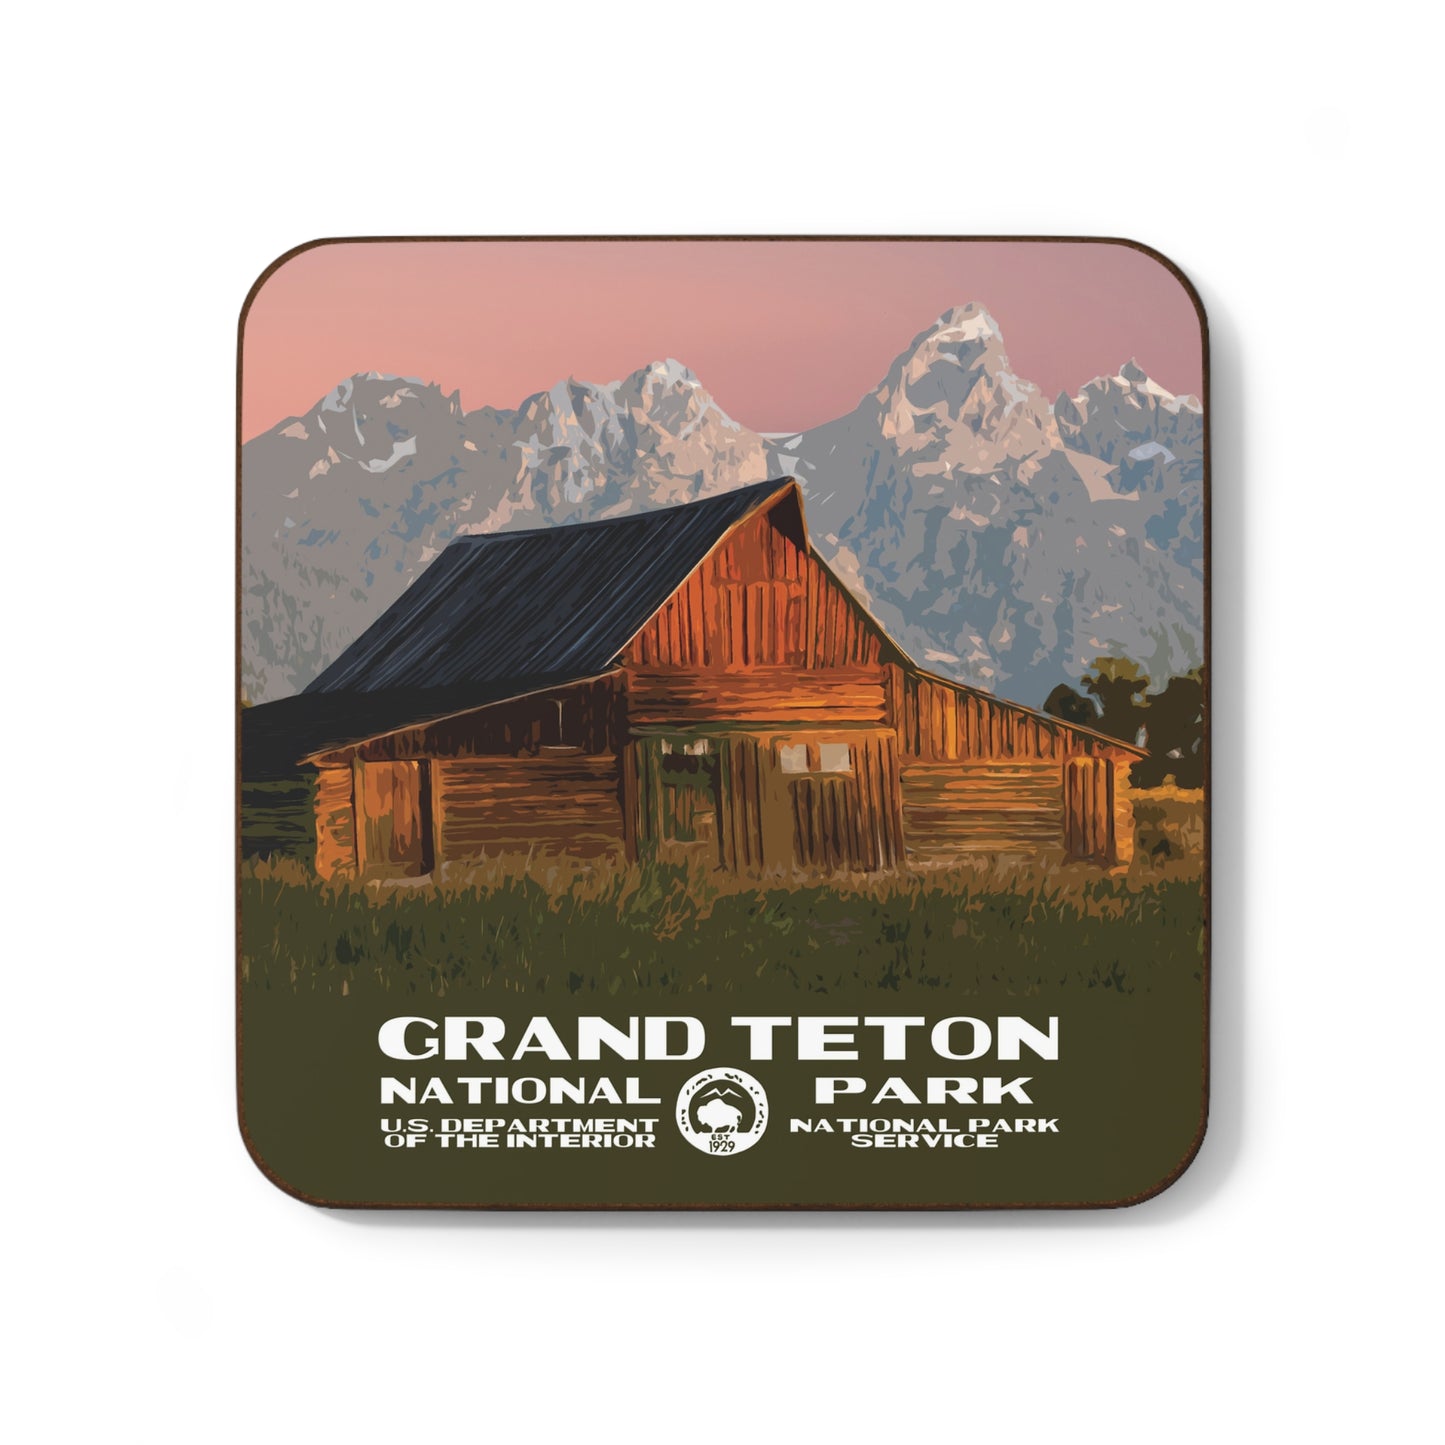 Grand Teton National Park Coaster - Moulton Barn